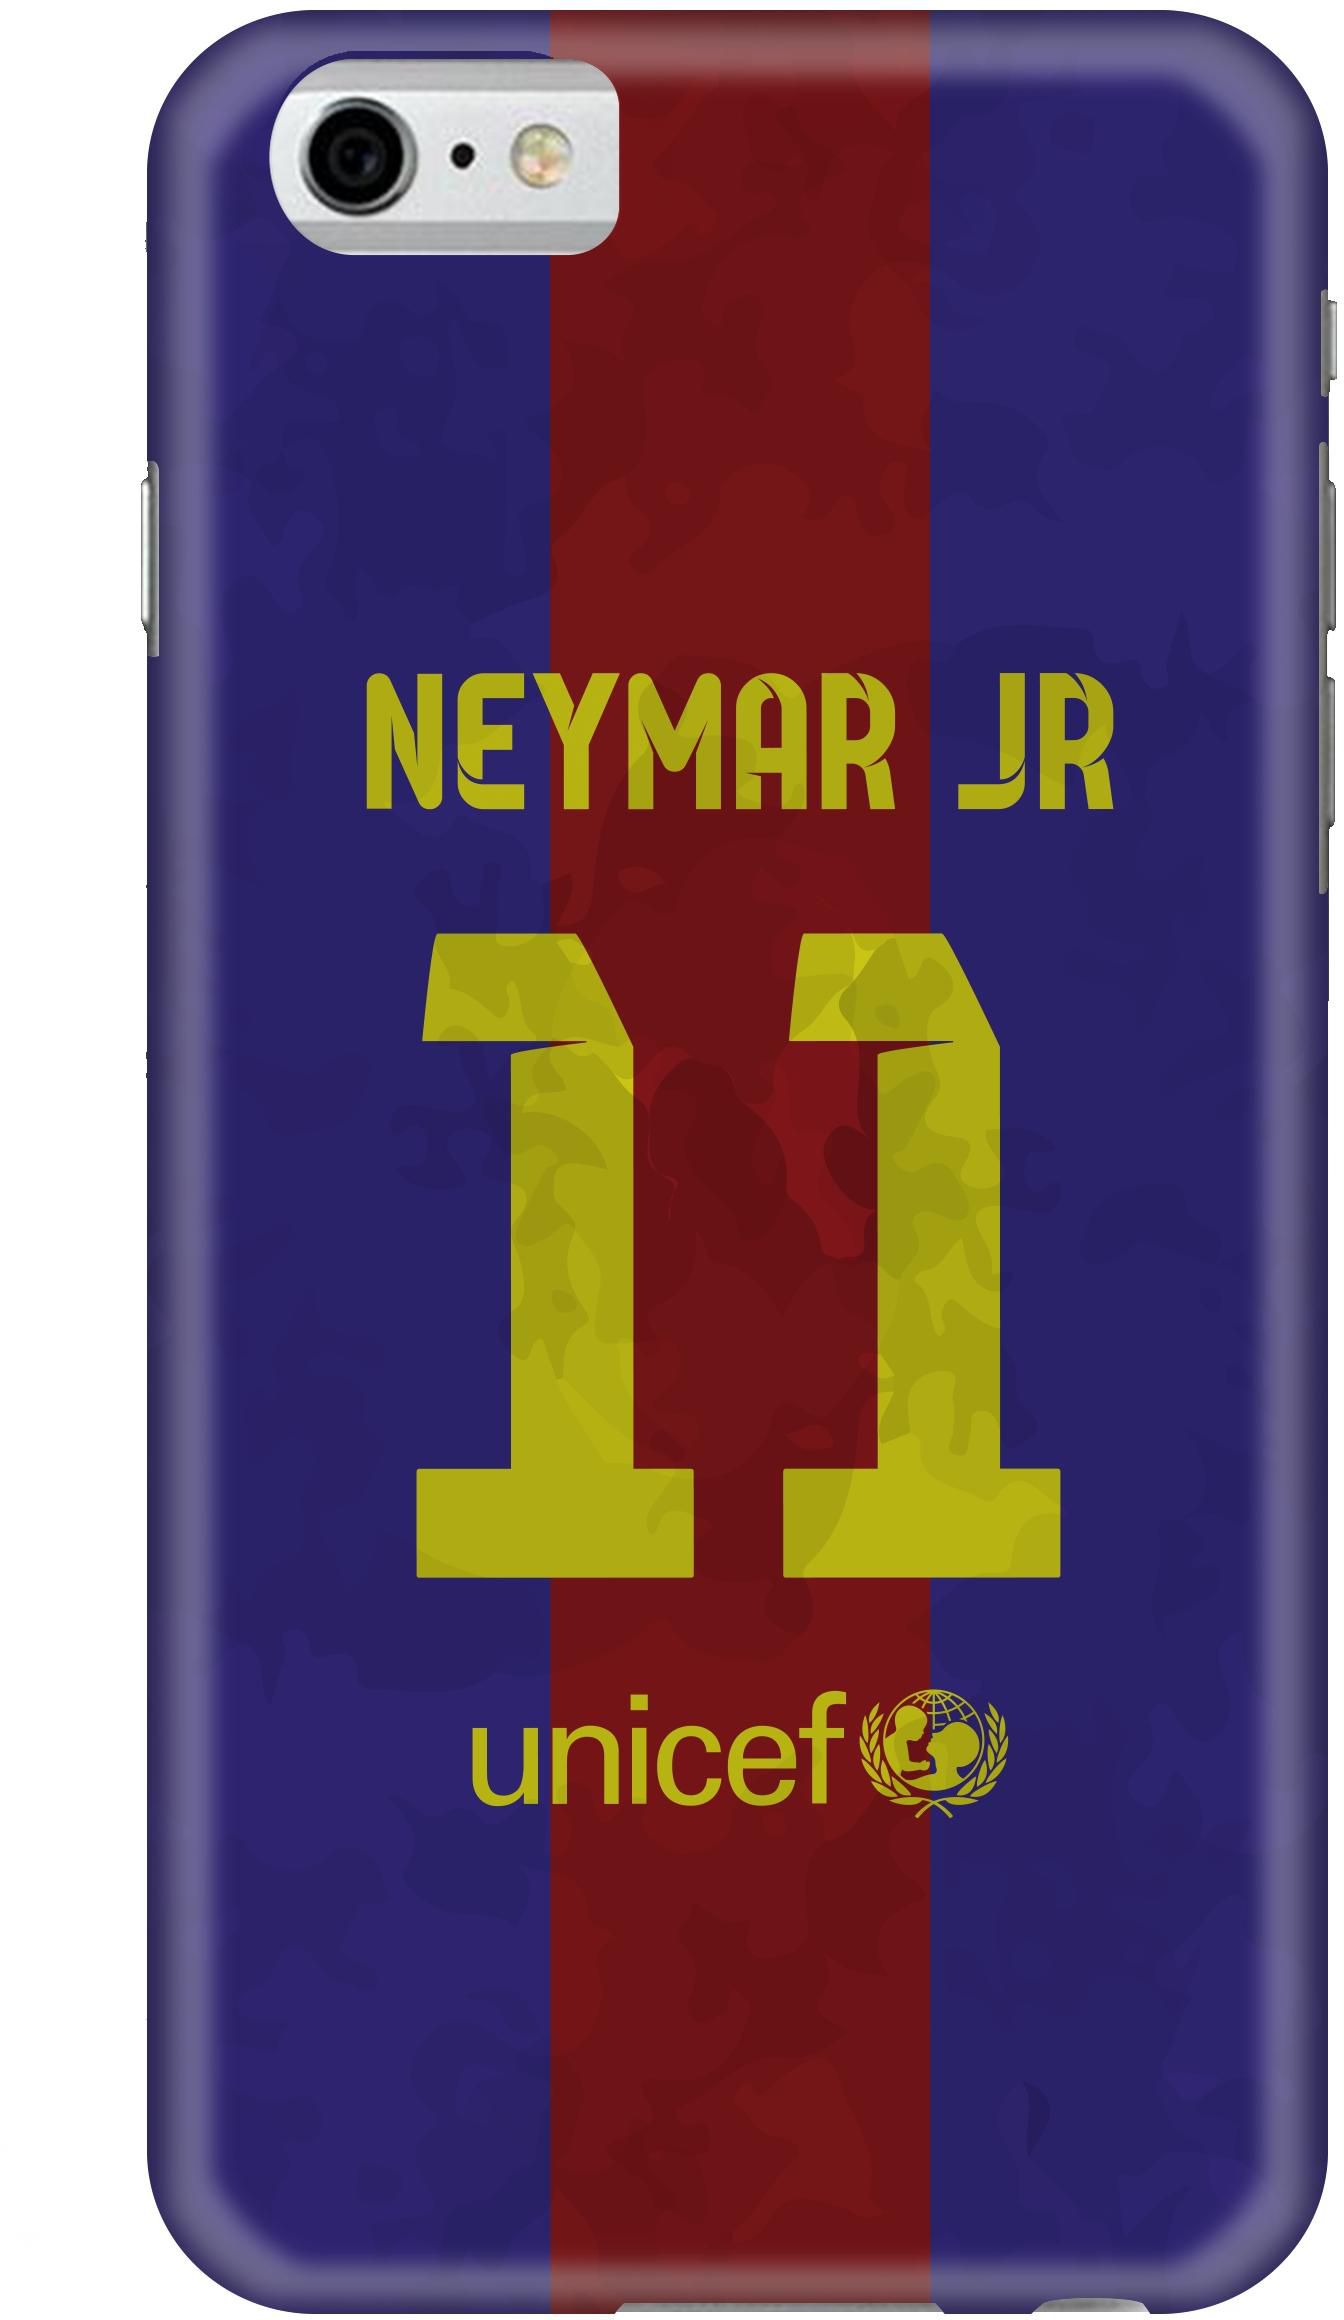 Stylizedd Apple iPhone 6/ 6S Premium Slim Snap case cover Gloss Finish - Neymar Jr Barca Jersey